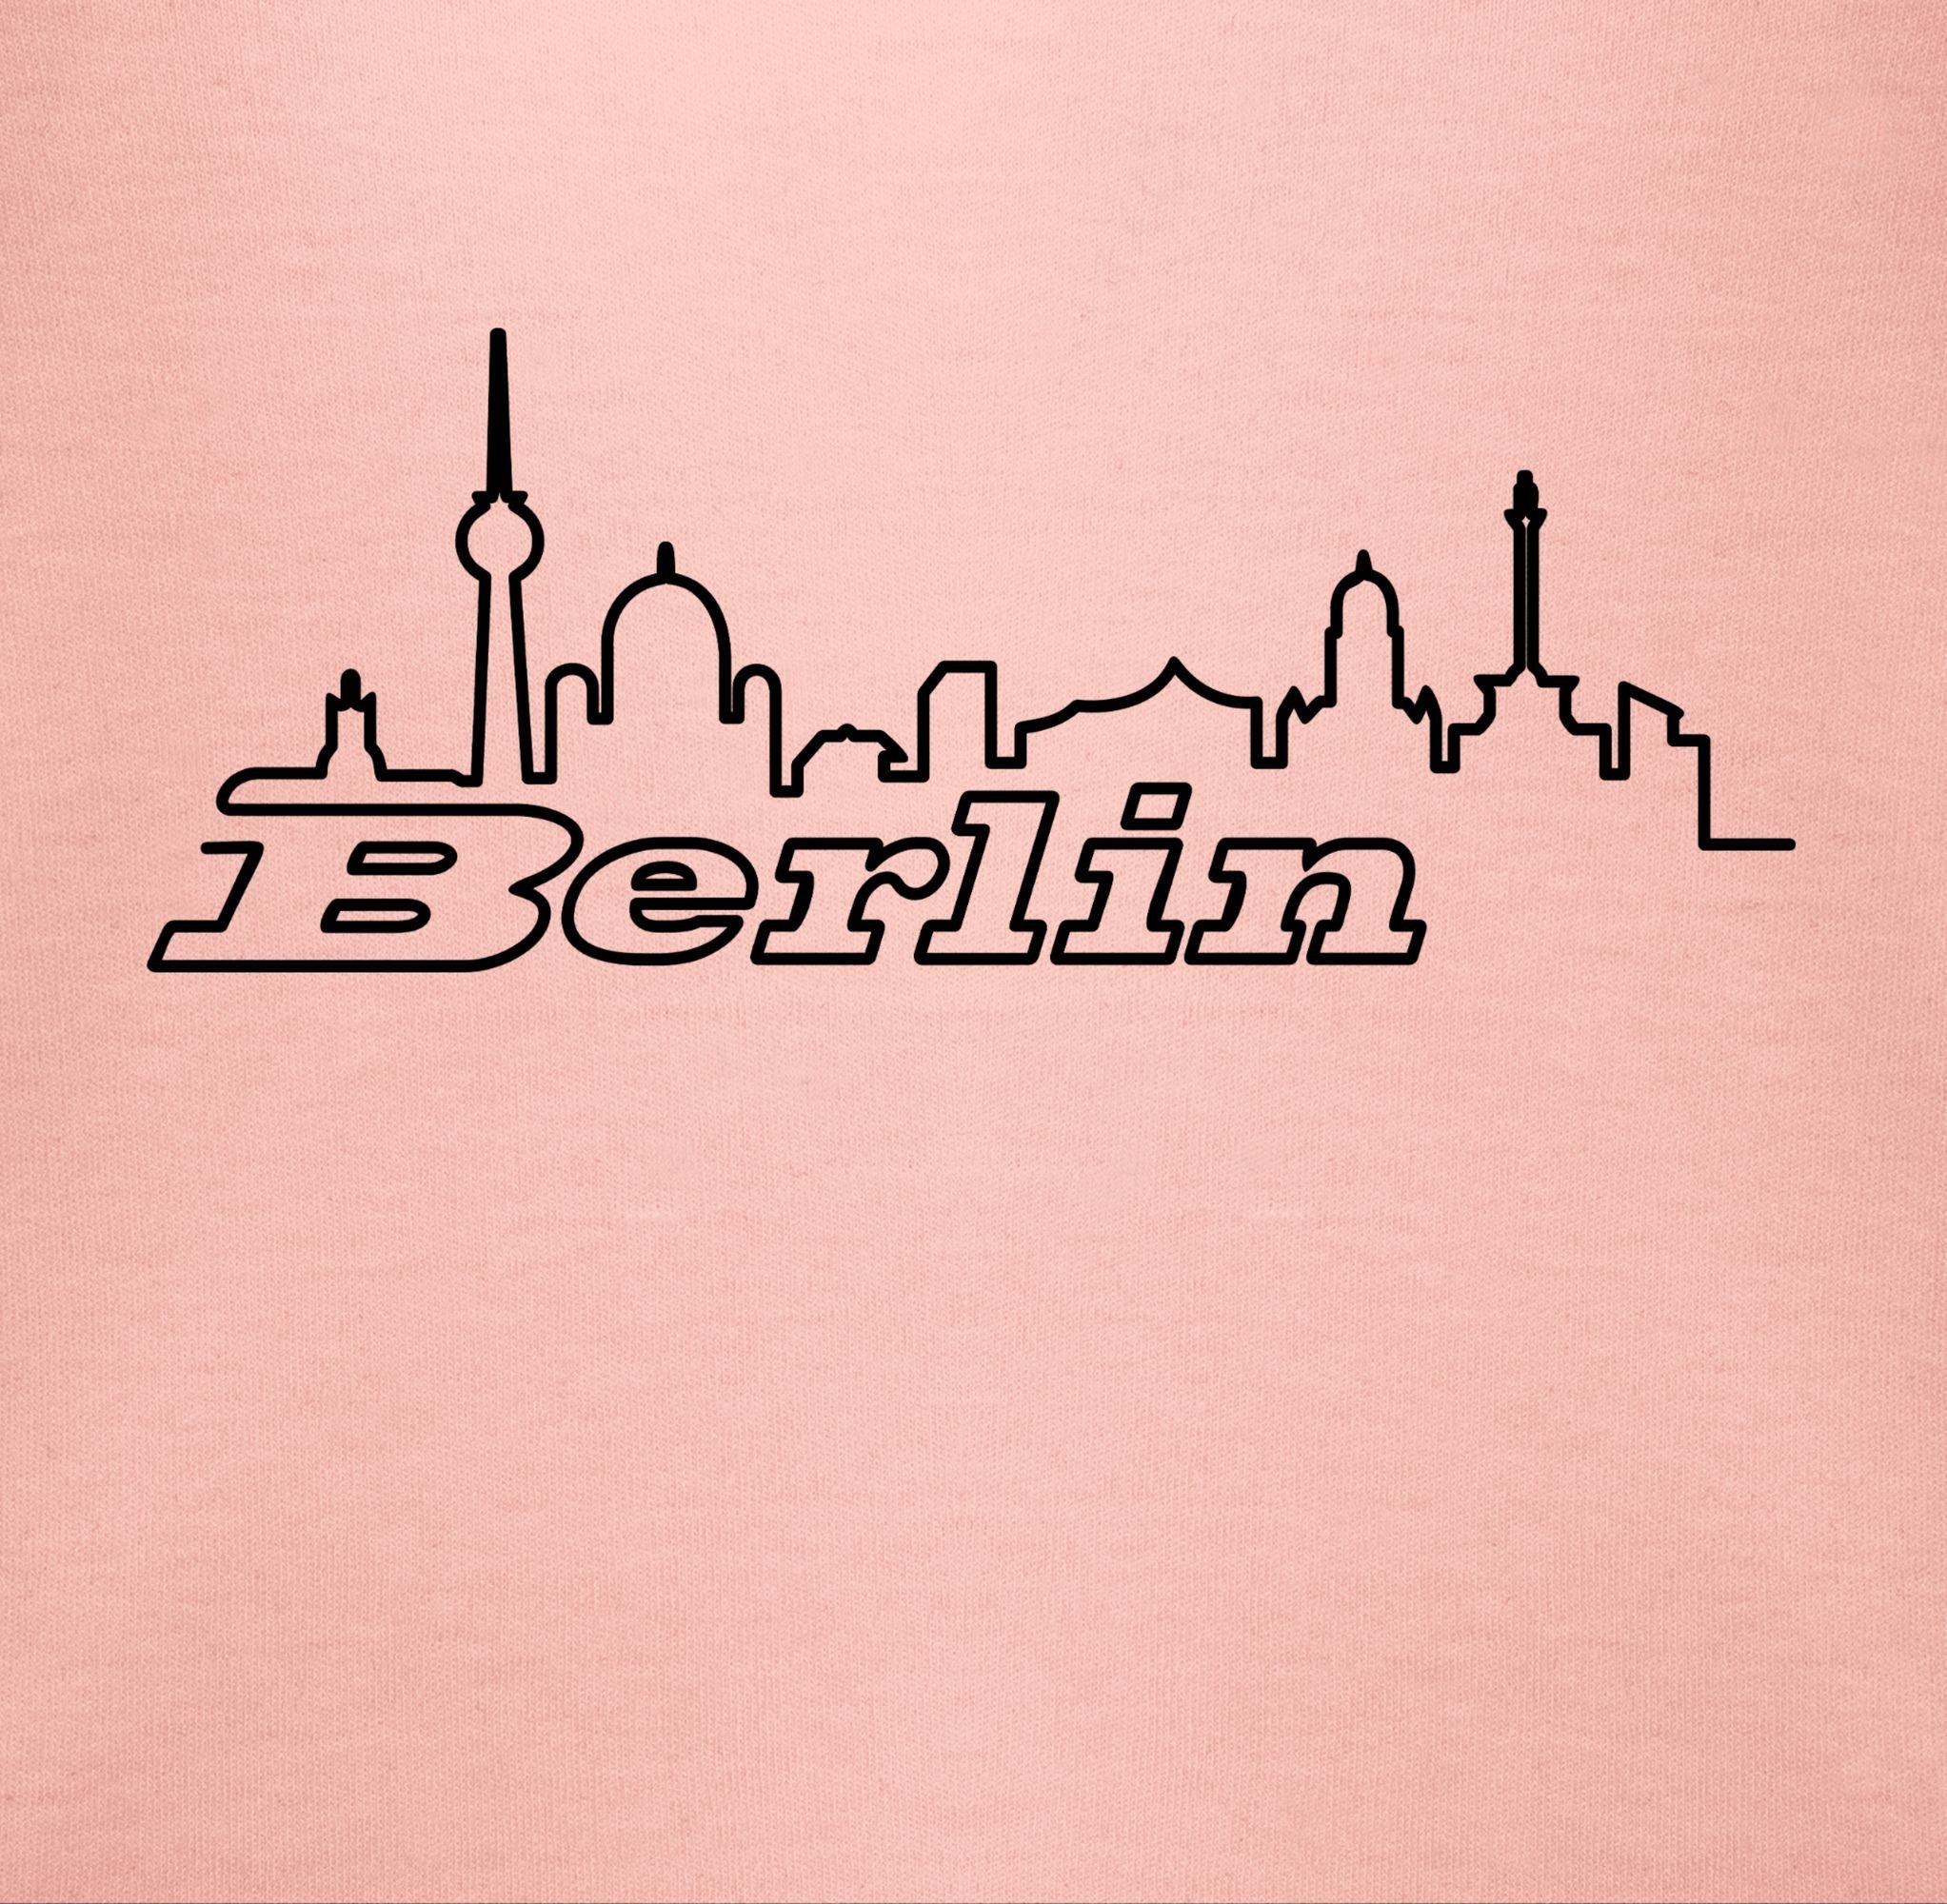 Skyline Babyrosa Shirtracer 3 Baby Shirtbody Wappen Länder Berlin